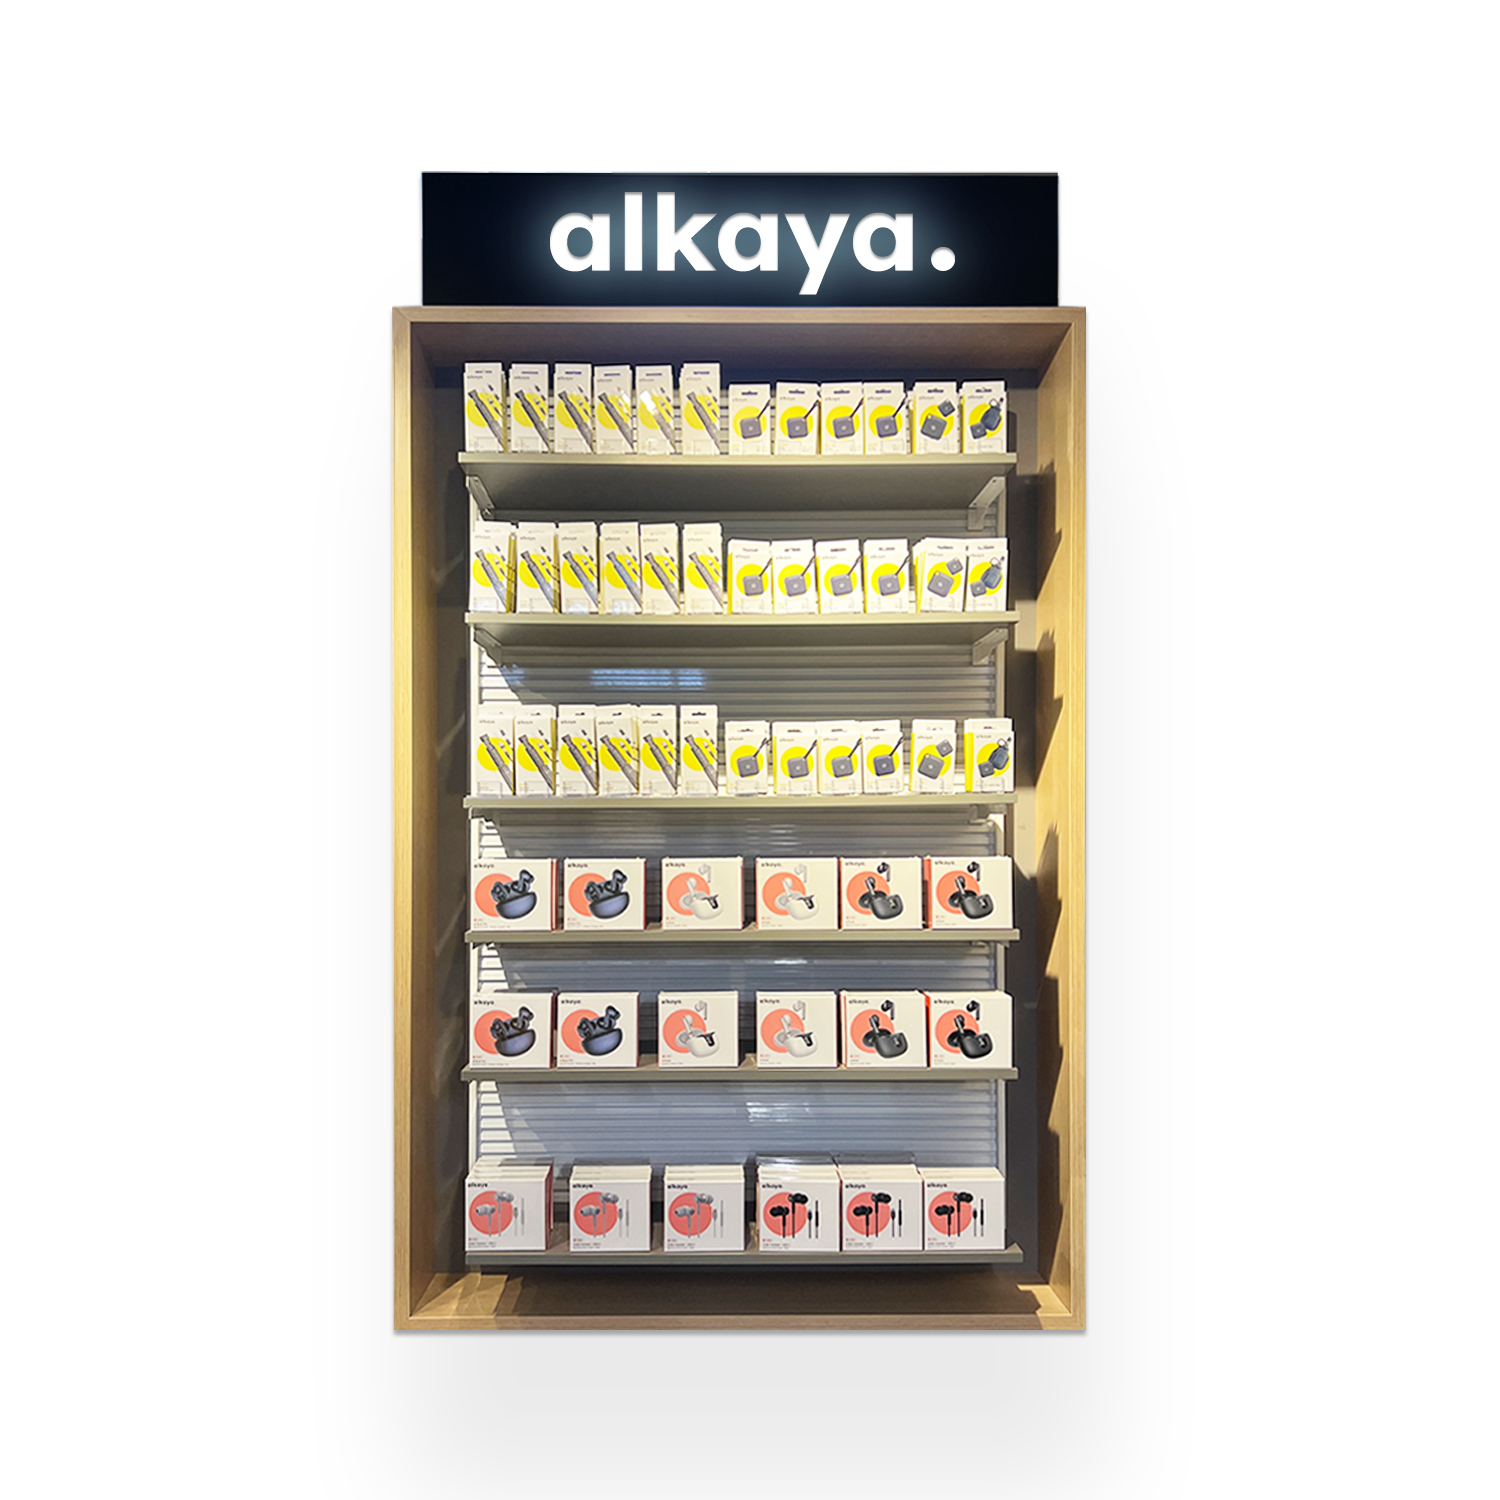 alkaya. | Sales wall conception